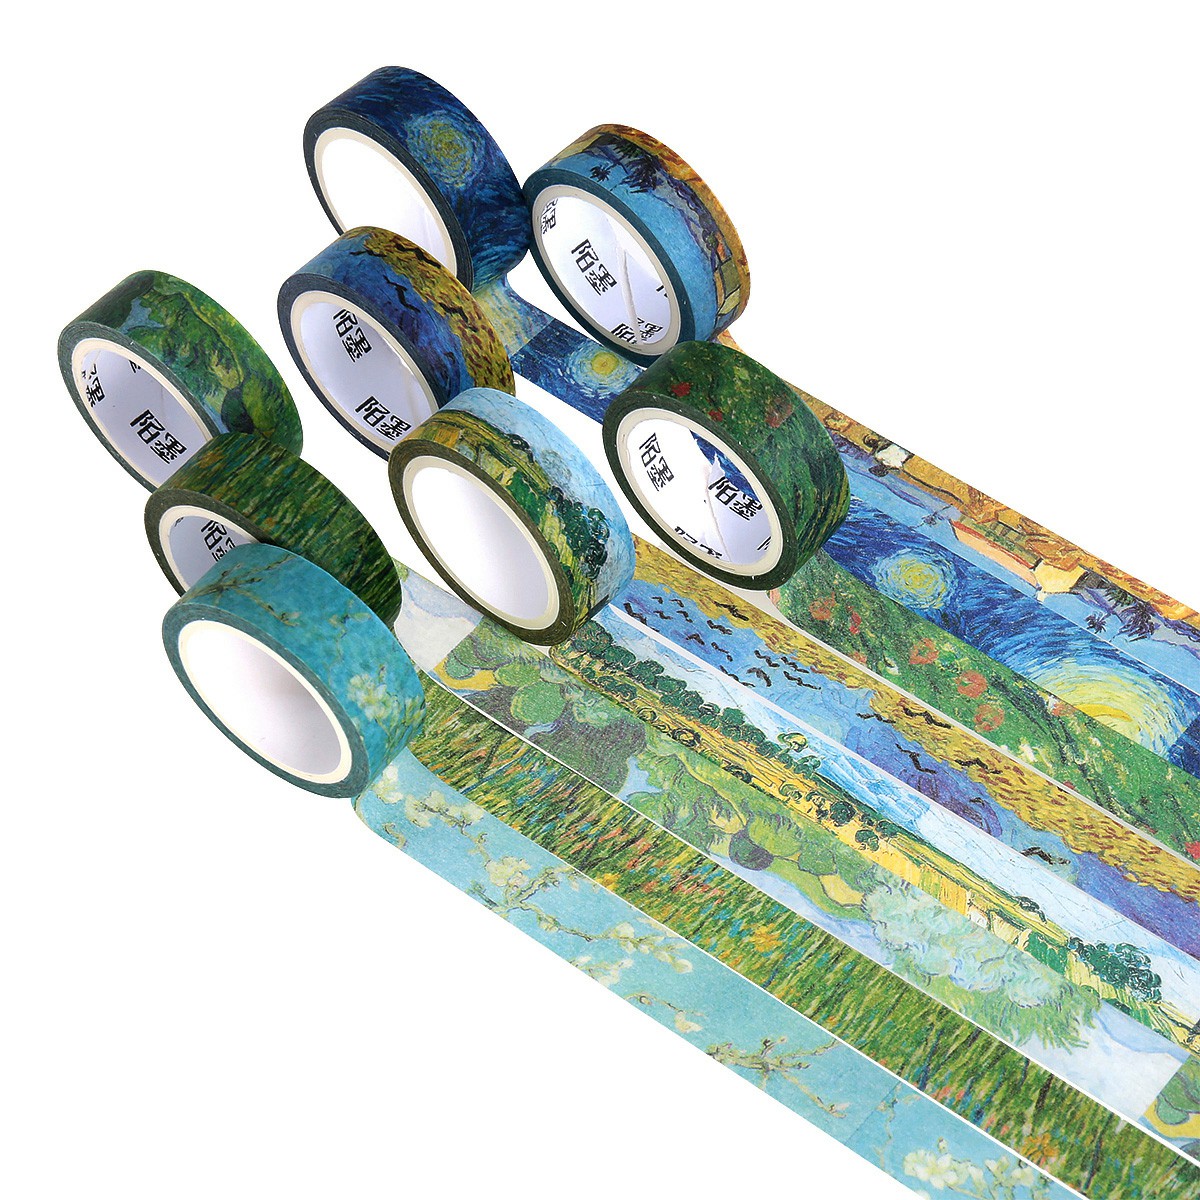 8pcs Washi Tapes Van Gogh Painting Paper Masking Tape Decorative Self Adhesive DIY Tapes Scrapbooking Stickers